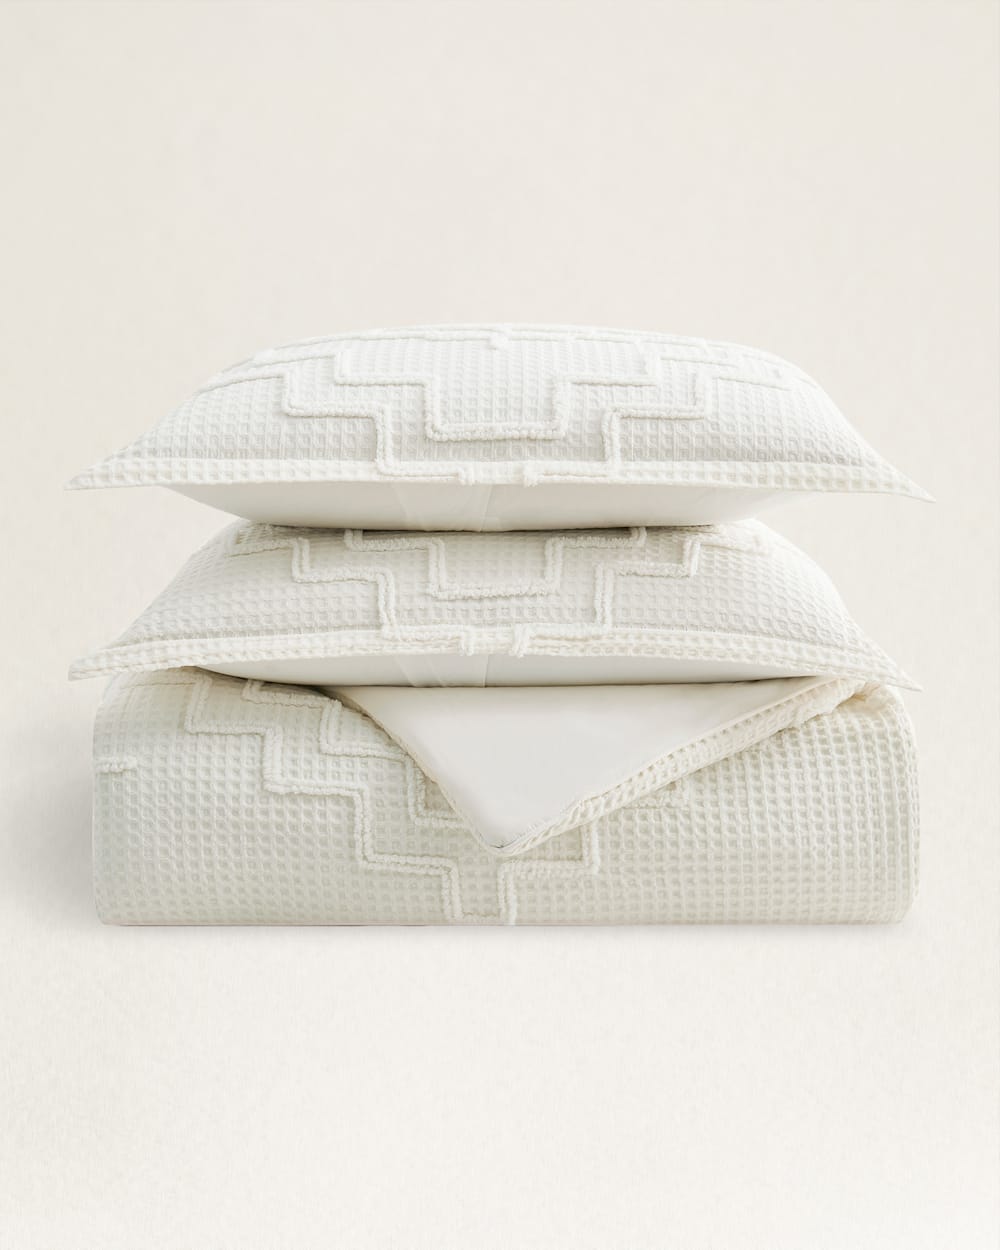 Shop the Kiva Steps Comforter Set for Ultimate Coziness | Pendleton